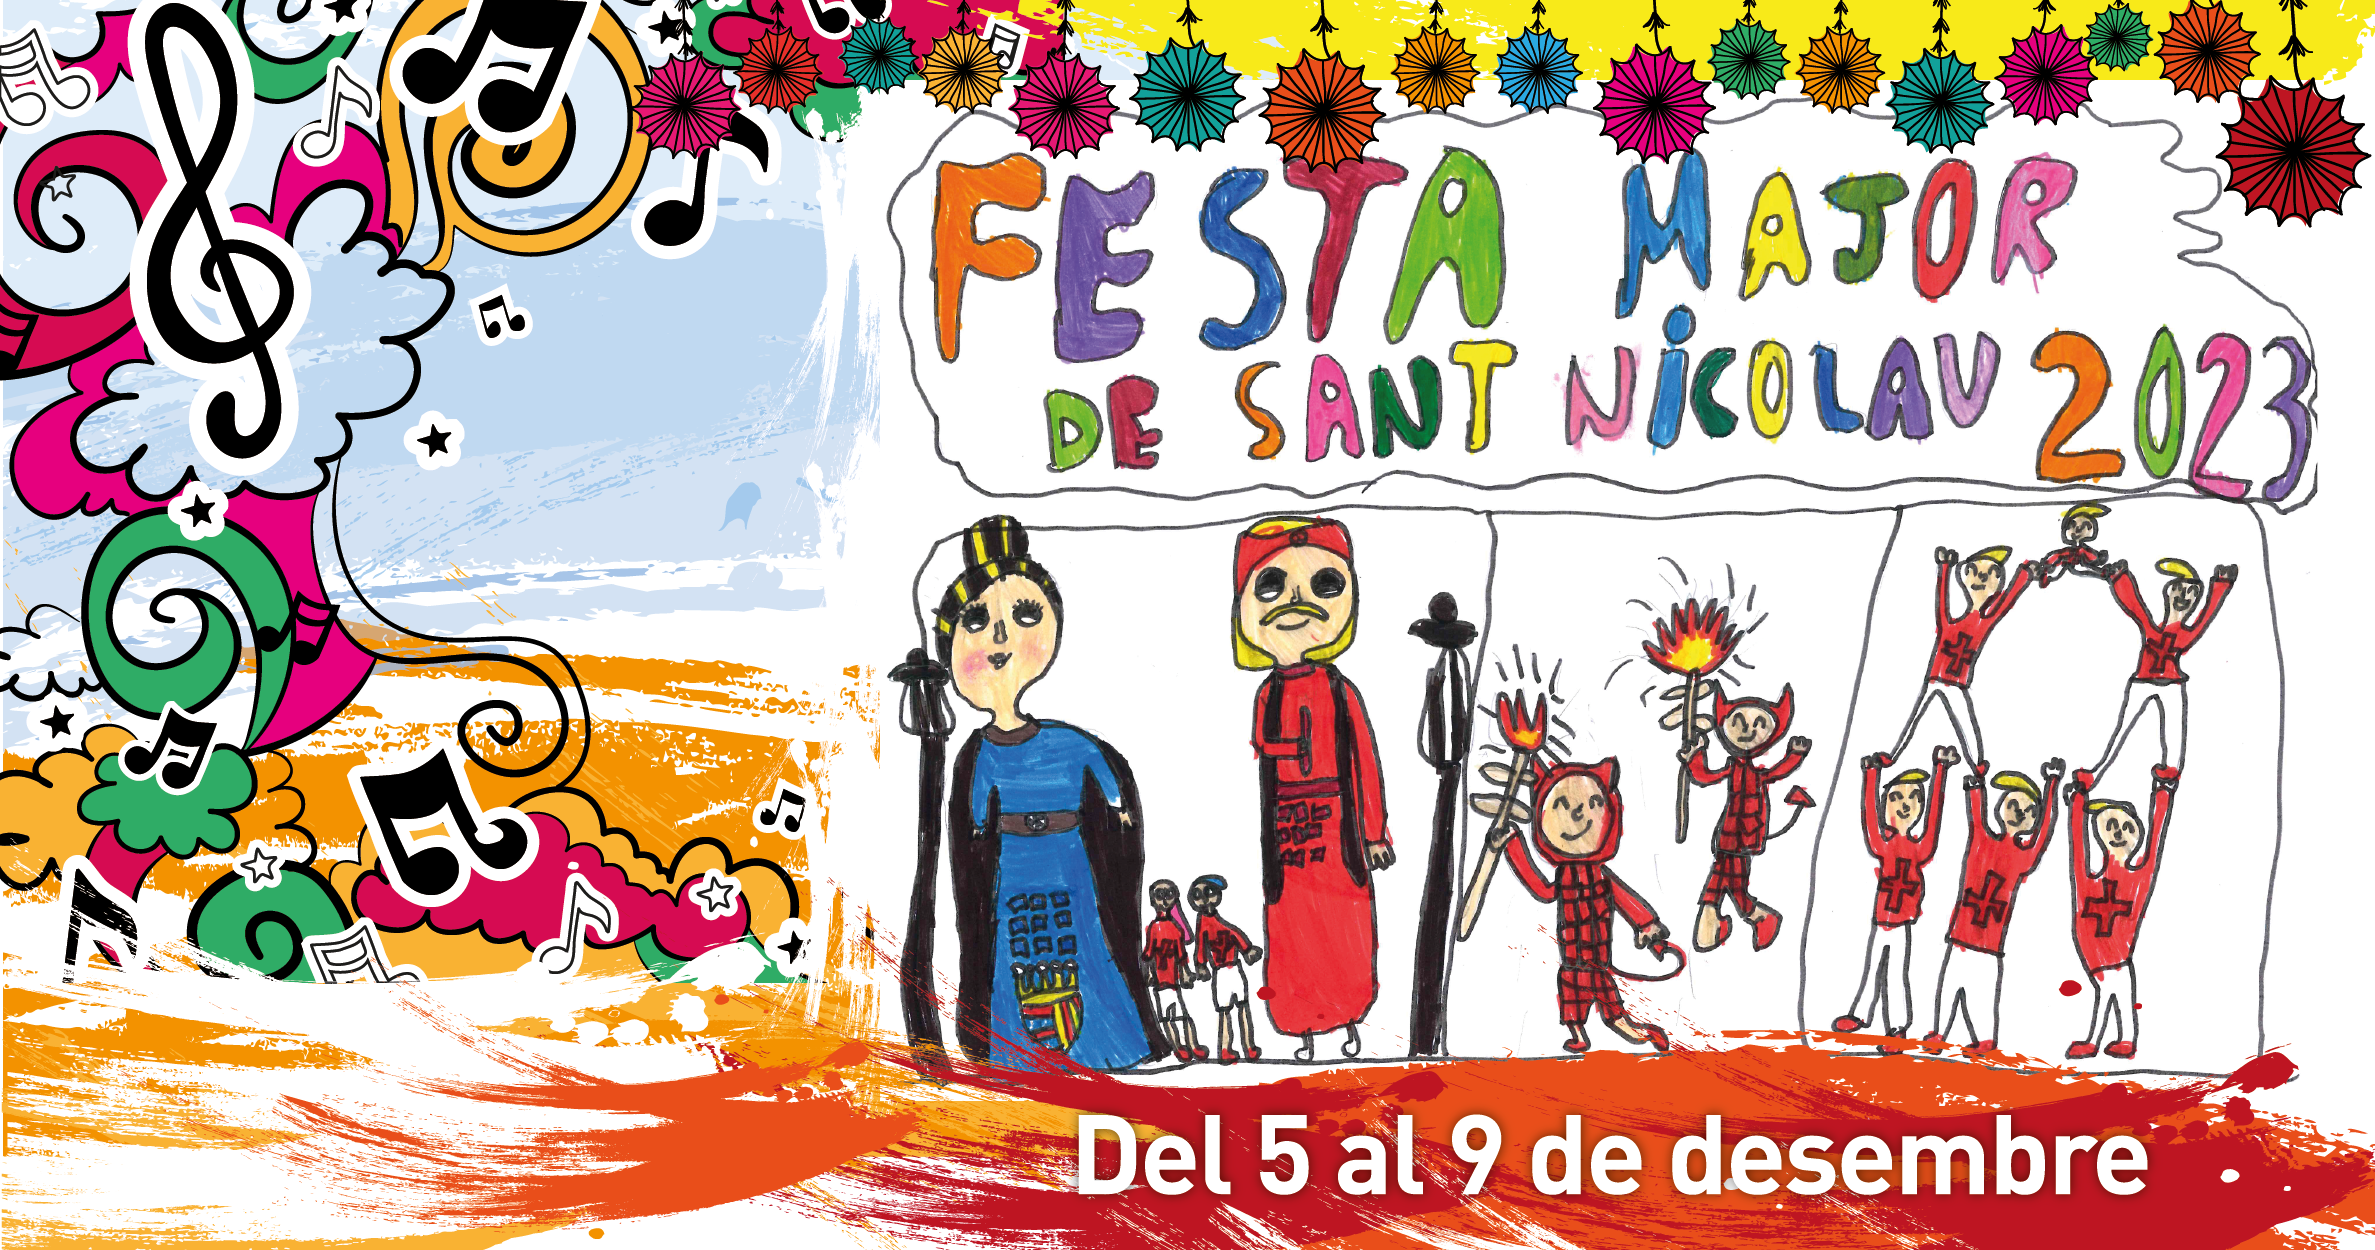 Festa major de Sant Nicolau, a partir de demà i fins dissabte